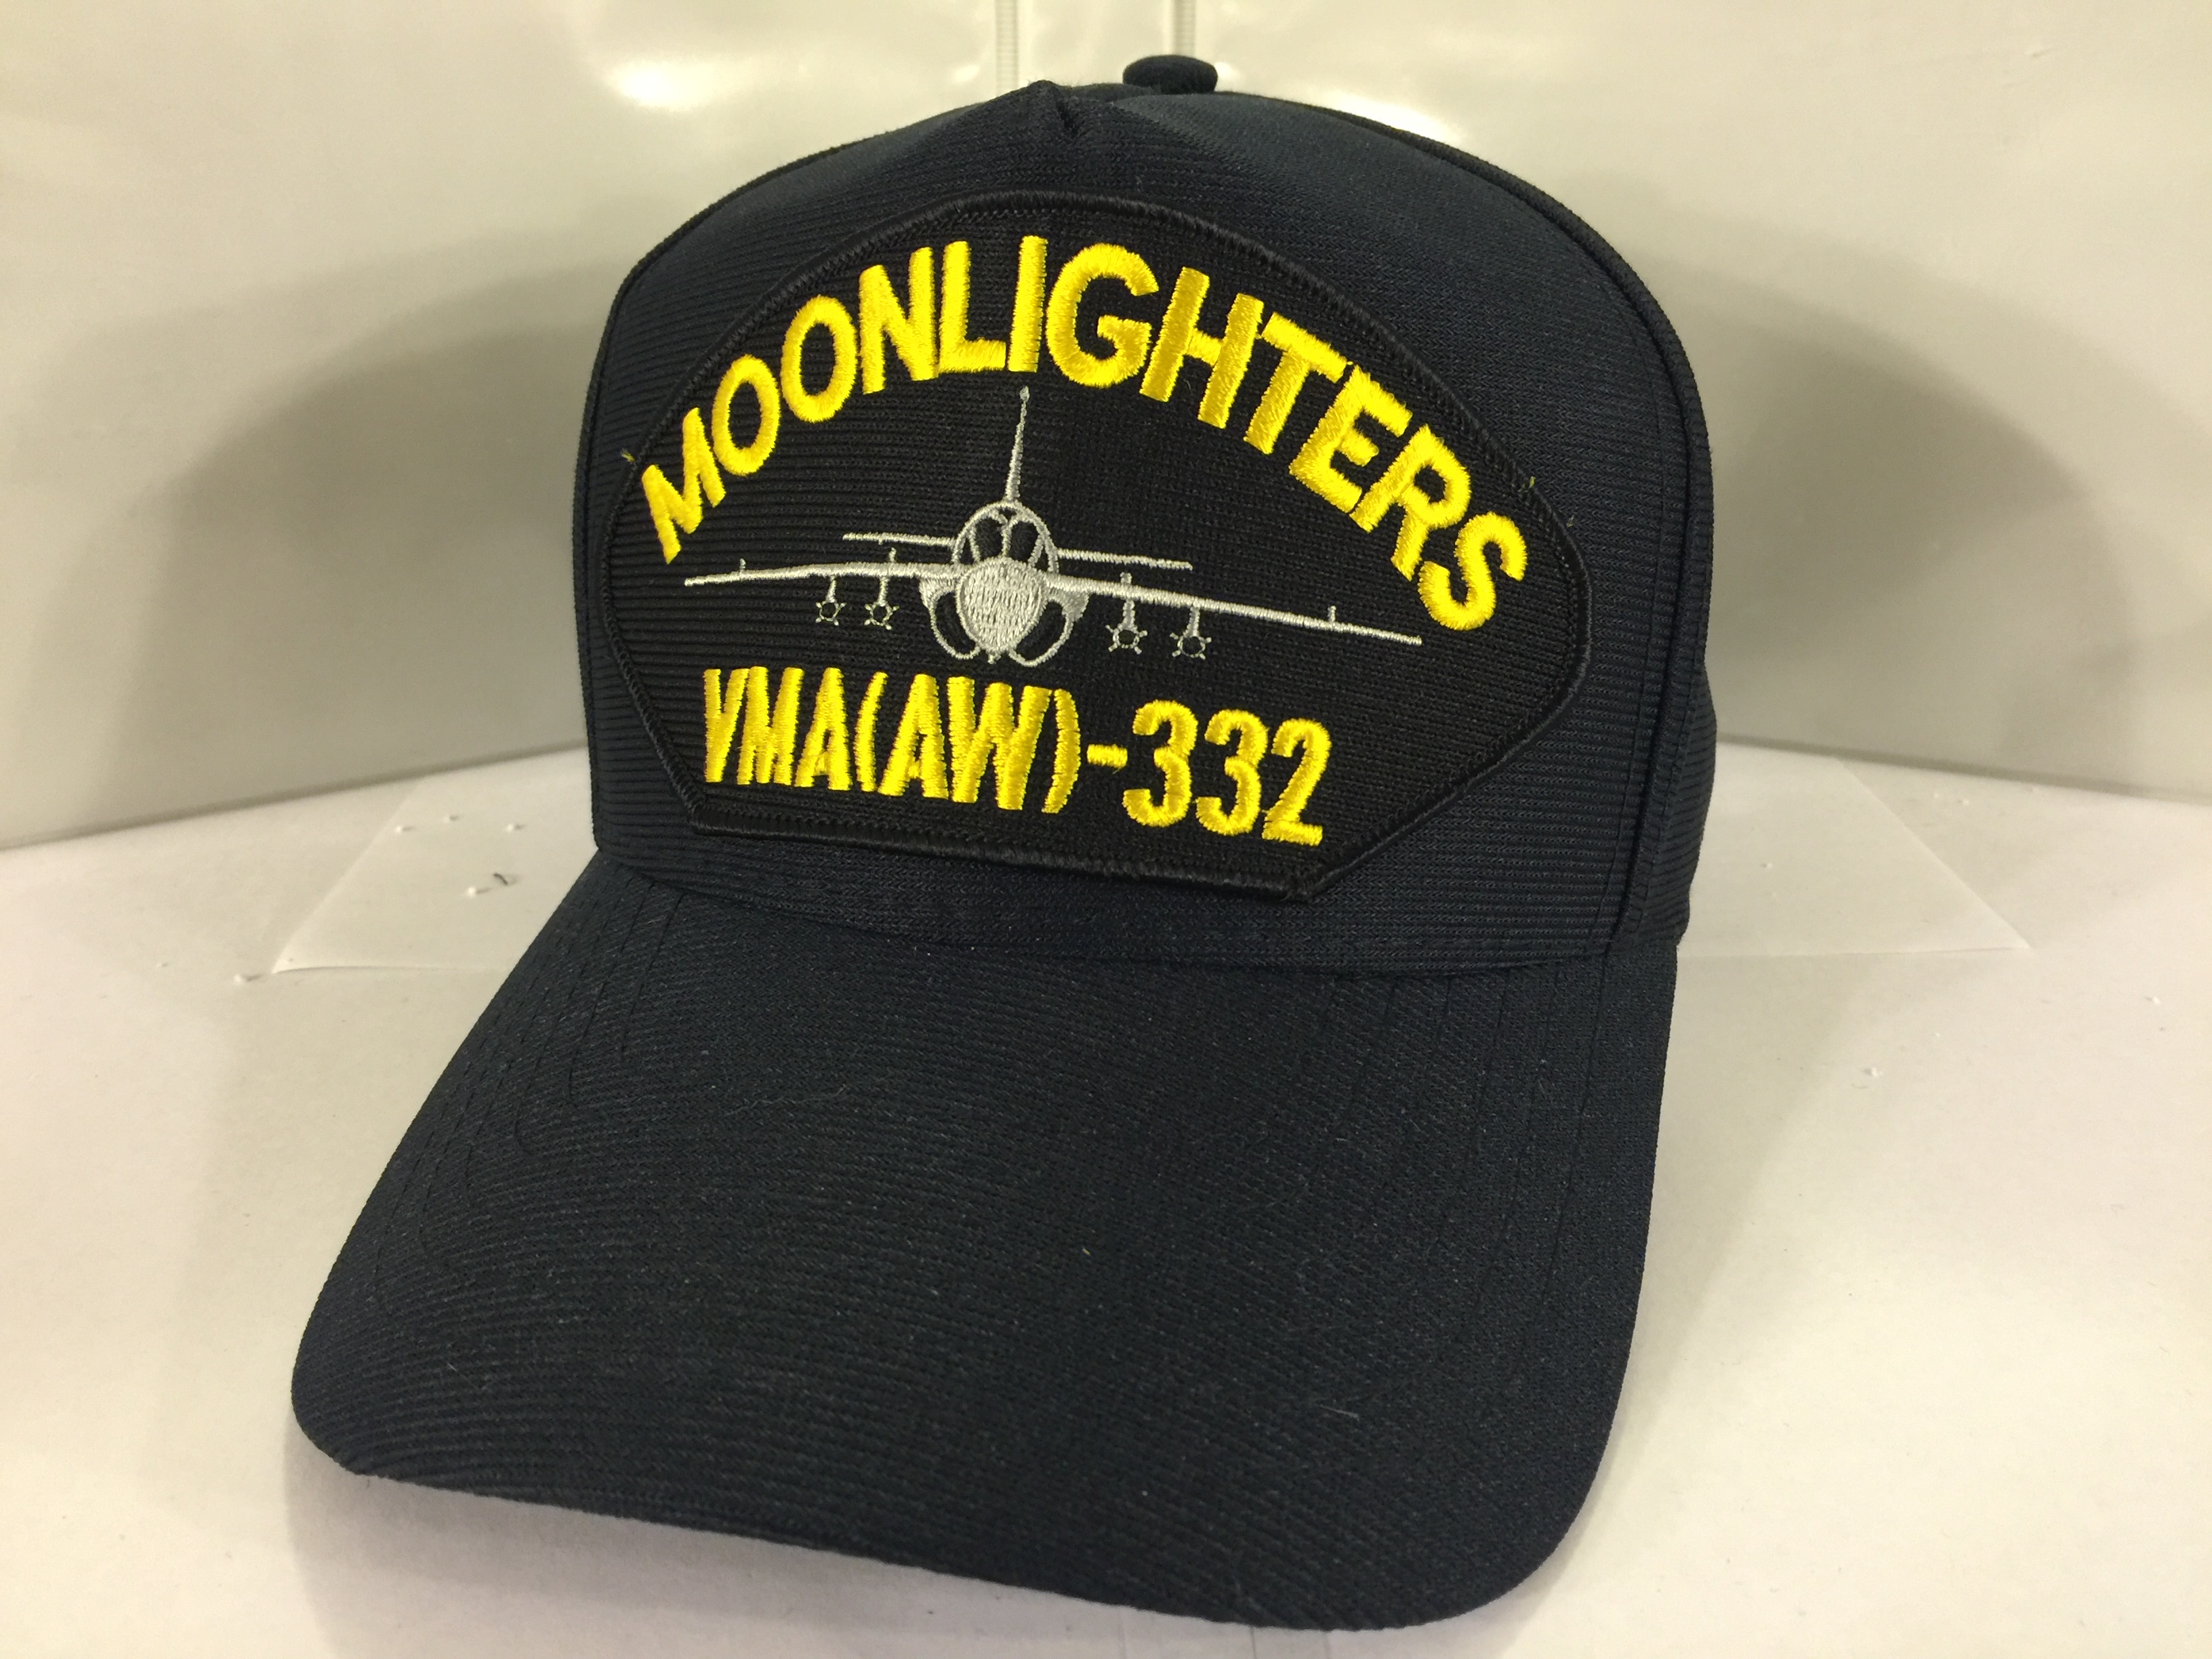 USMC VMA(AW)-332 MOONLIGHTERS Ballcap (Dk Blue)